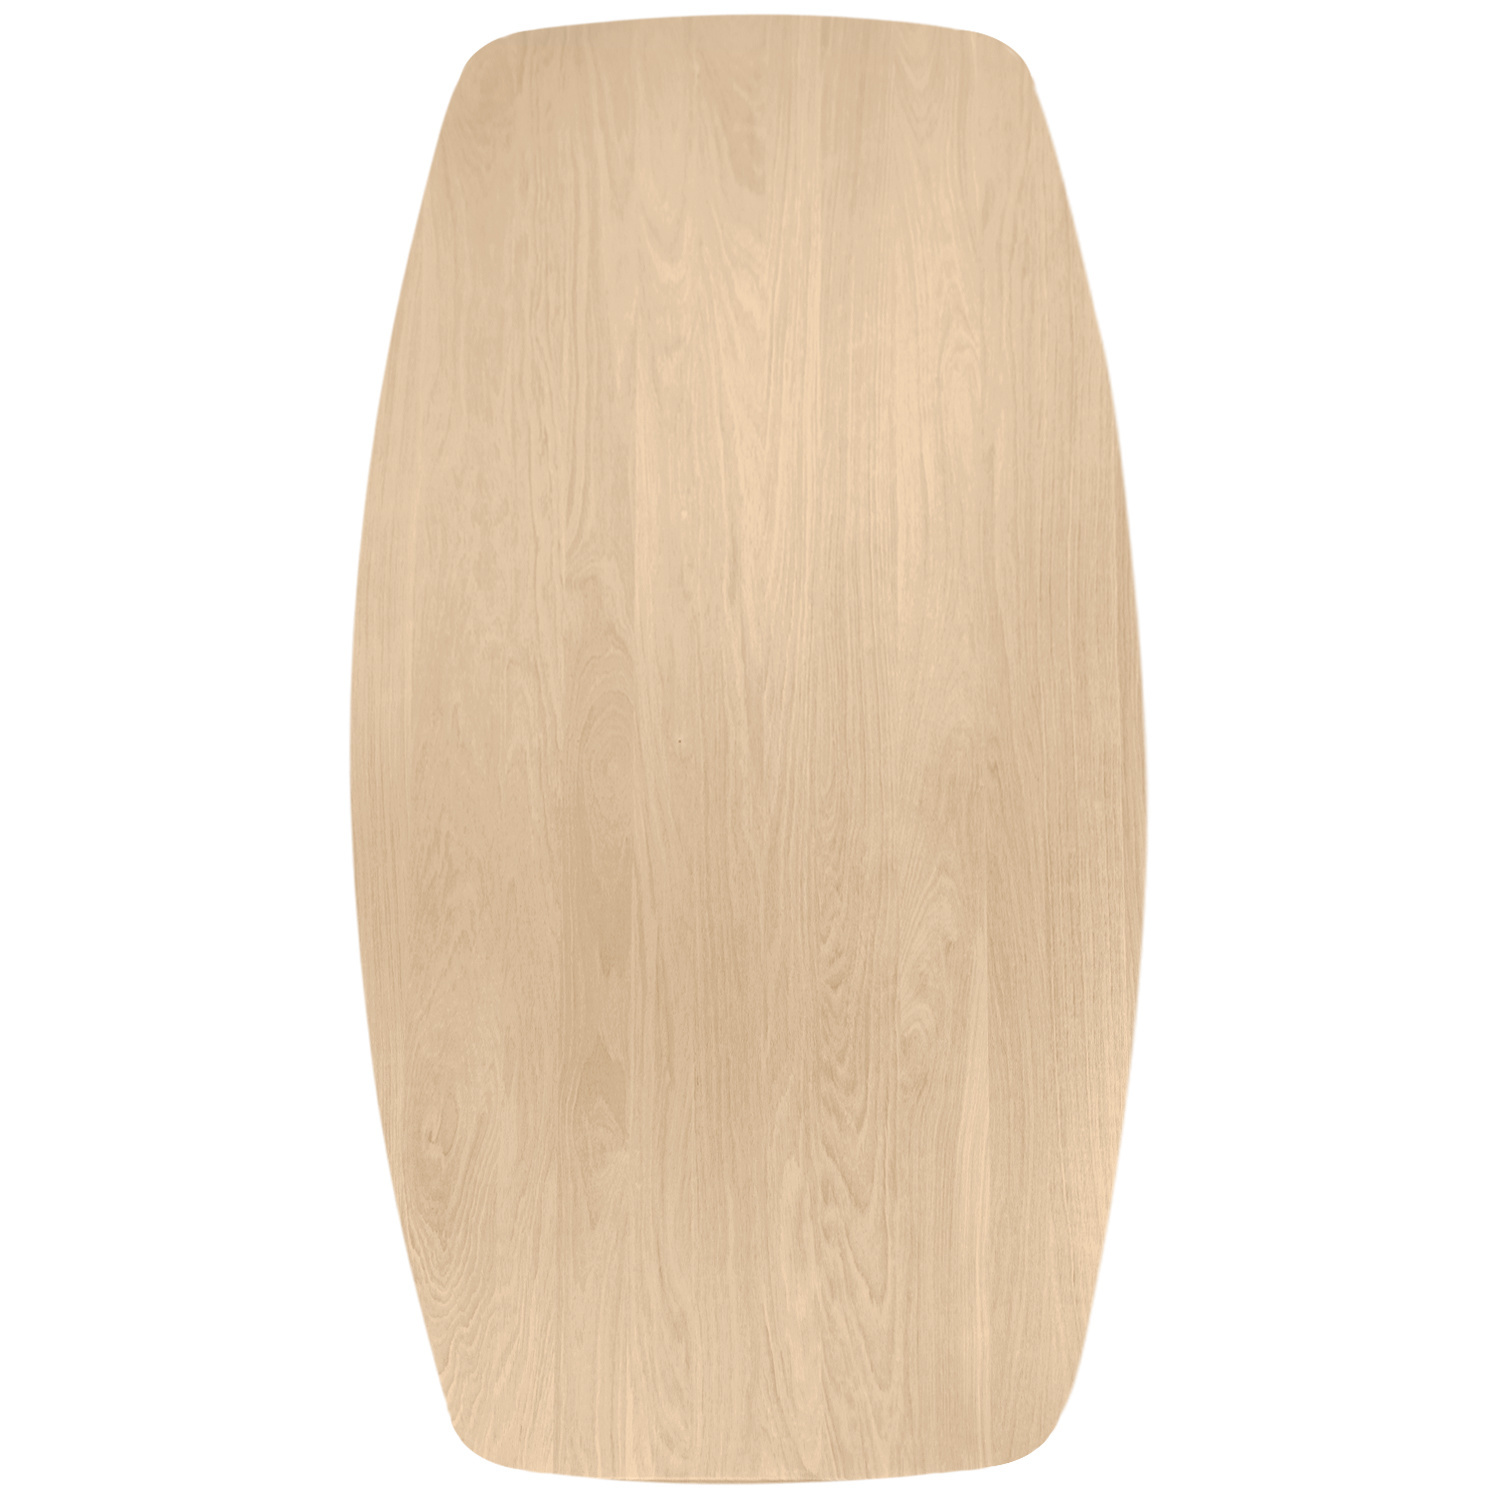  Tischplatte Eiche dänisch-oval - 2 cm dick - Eichenholz A-Qualität - Bootsform Eiche Tischplatte massiv - HF 8-12%